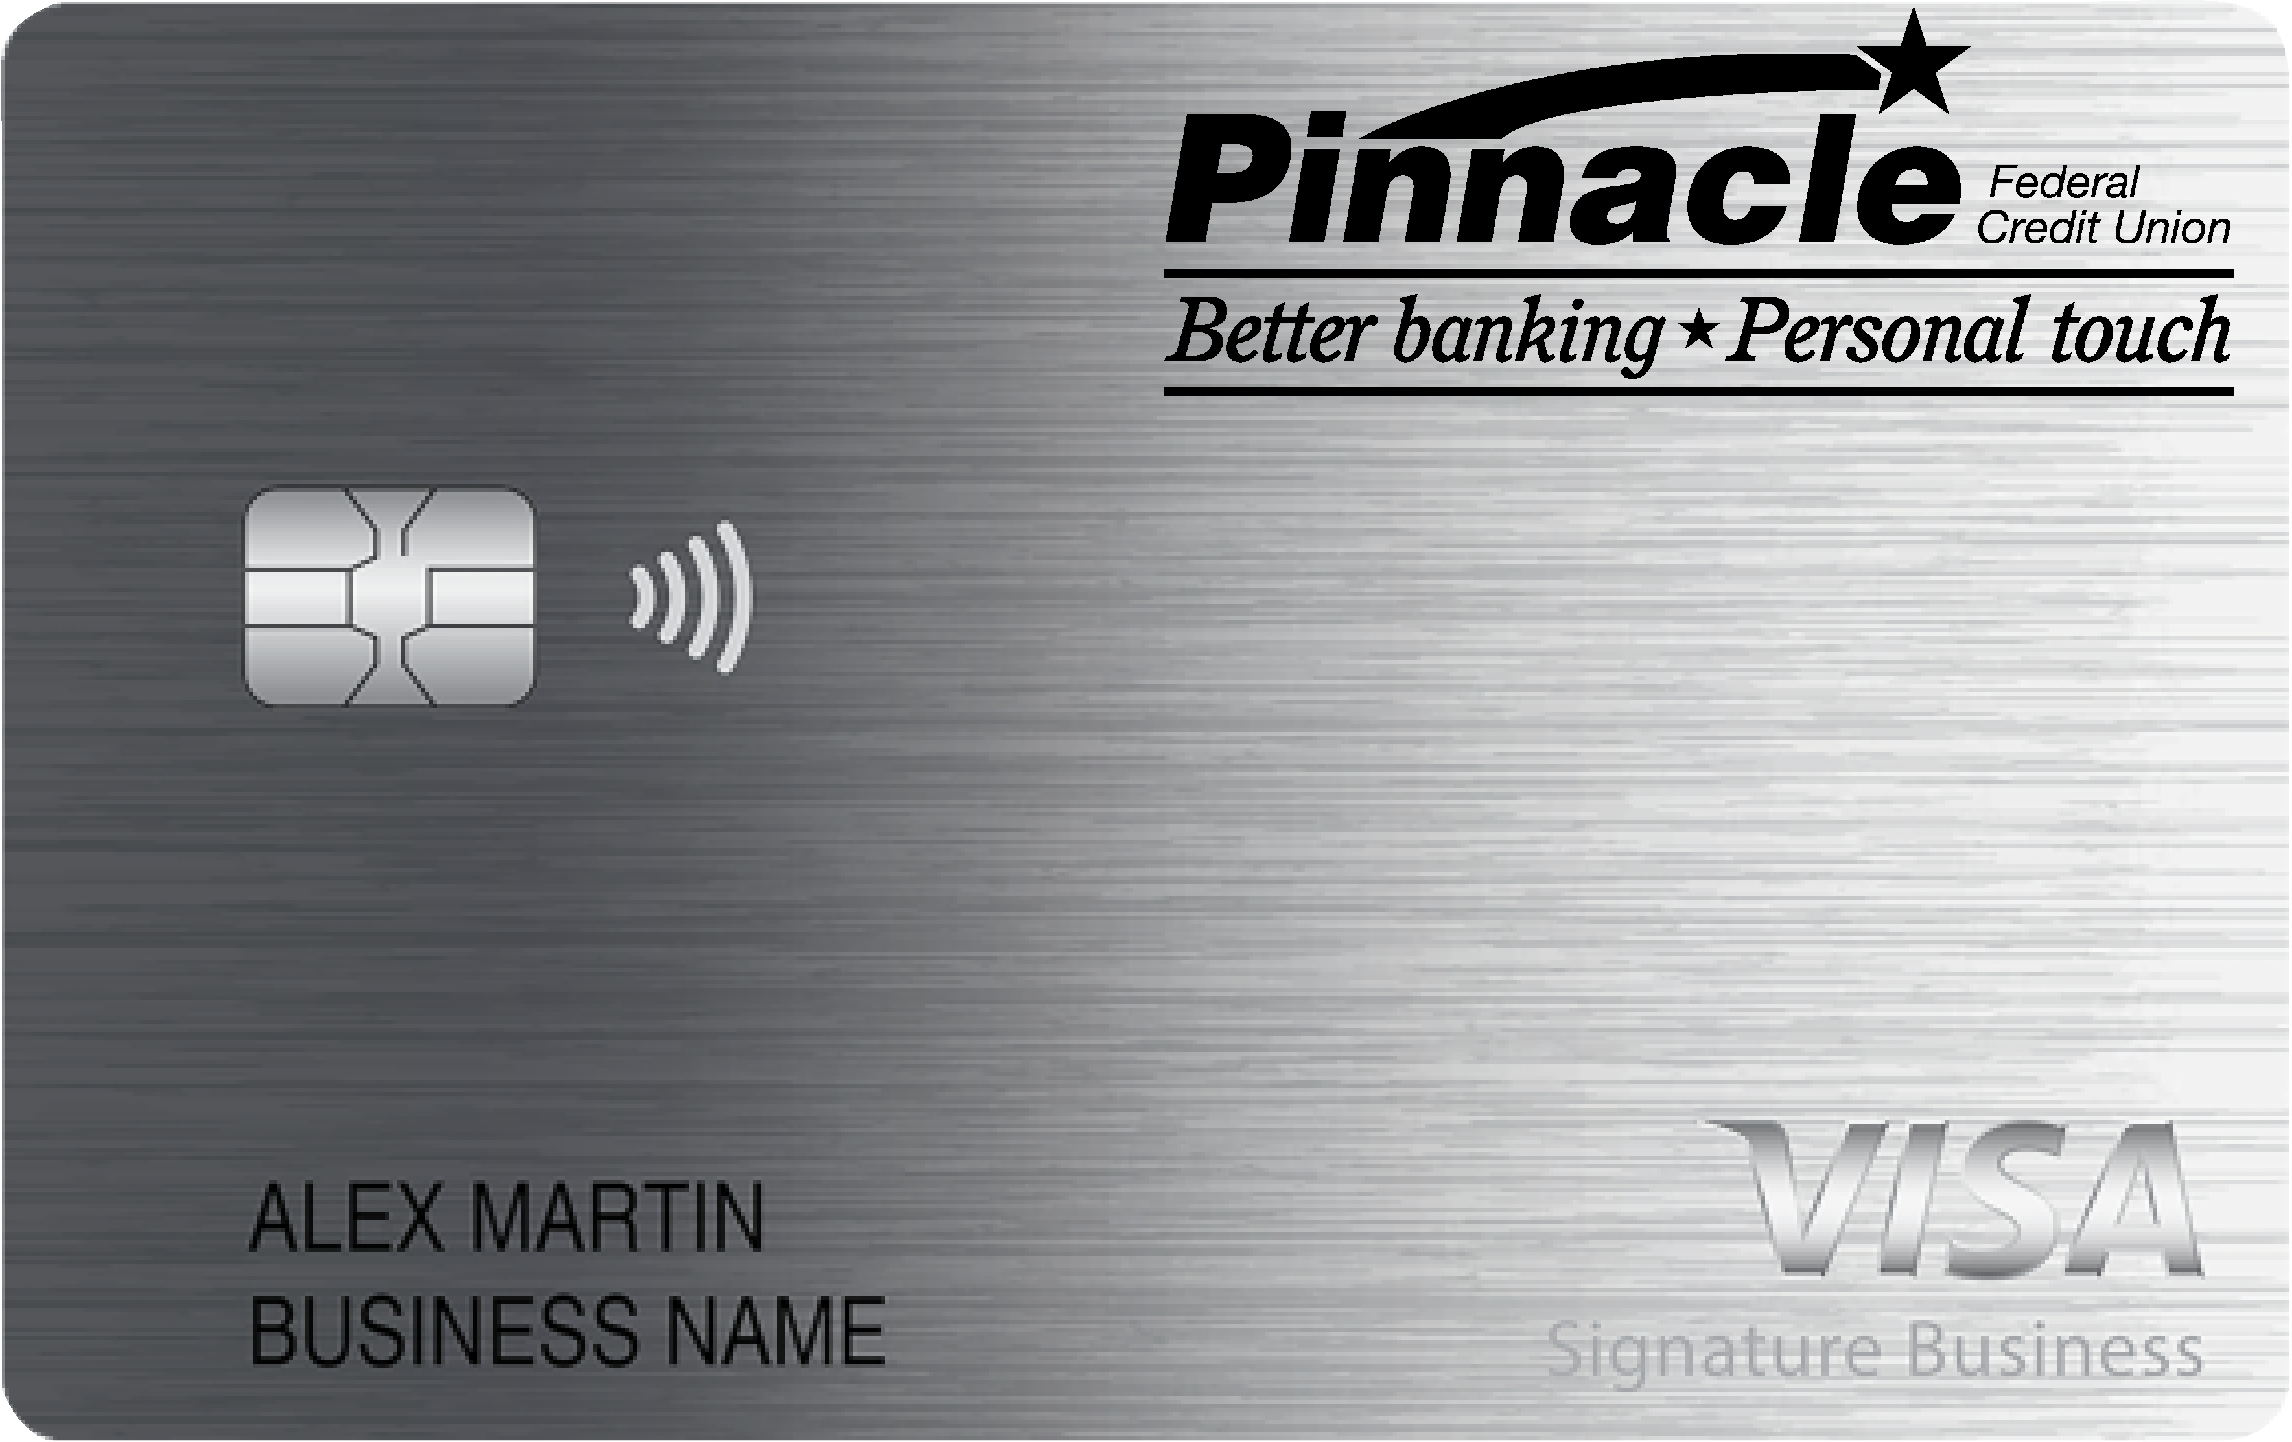 Pinnacle Federal Credit Union Smart Business Rewards Card